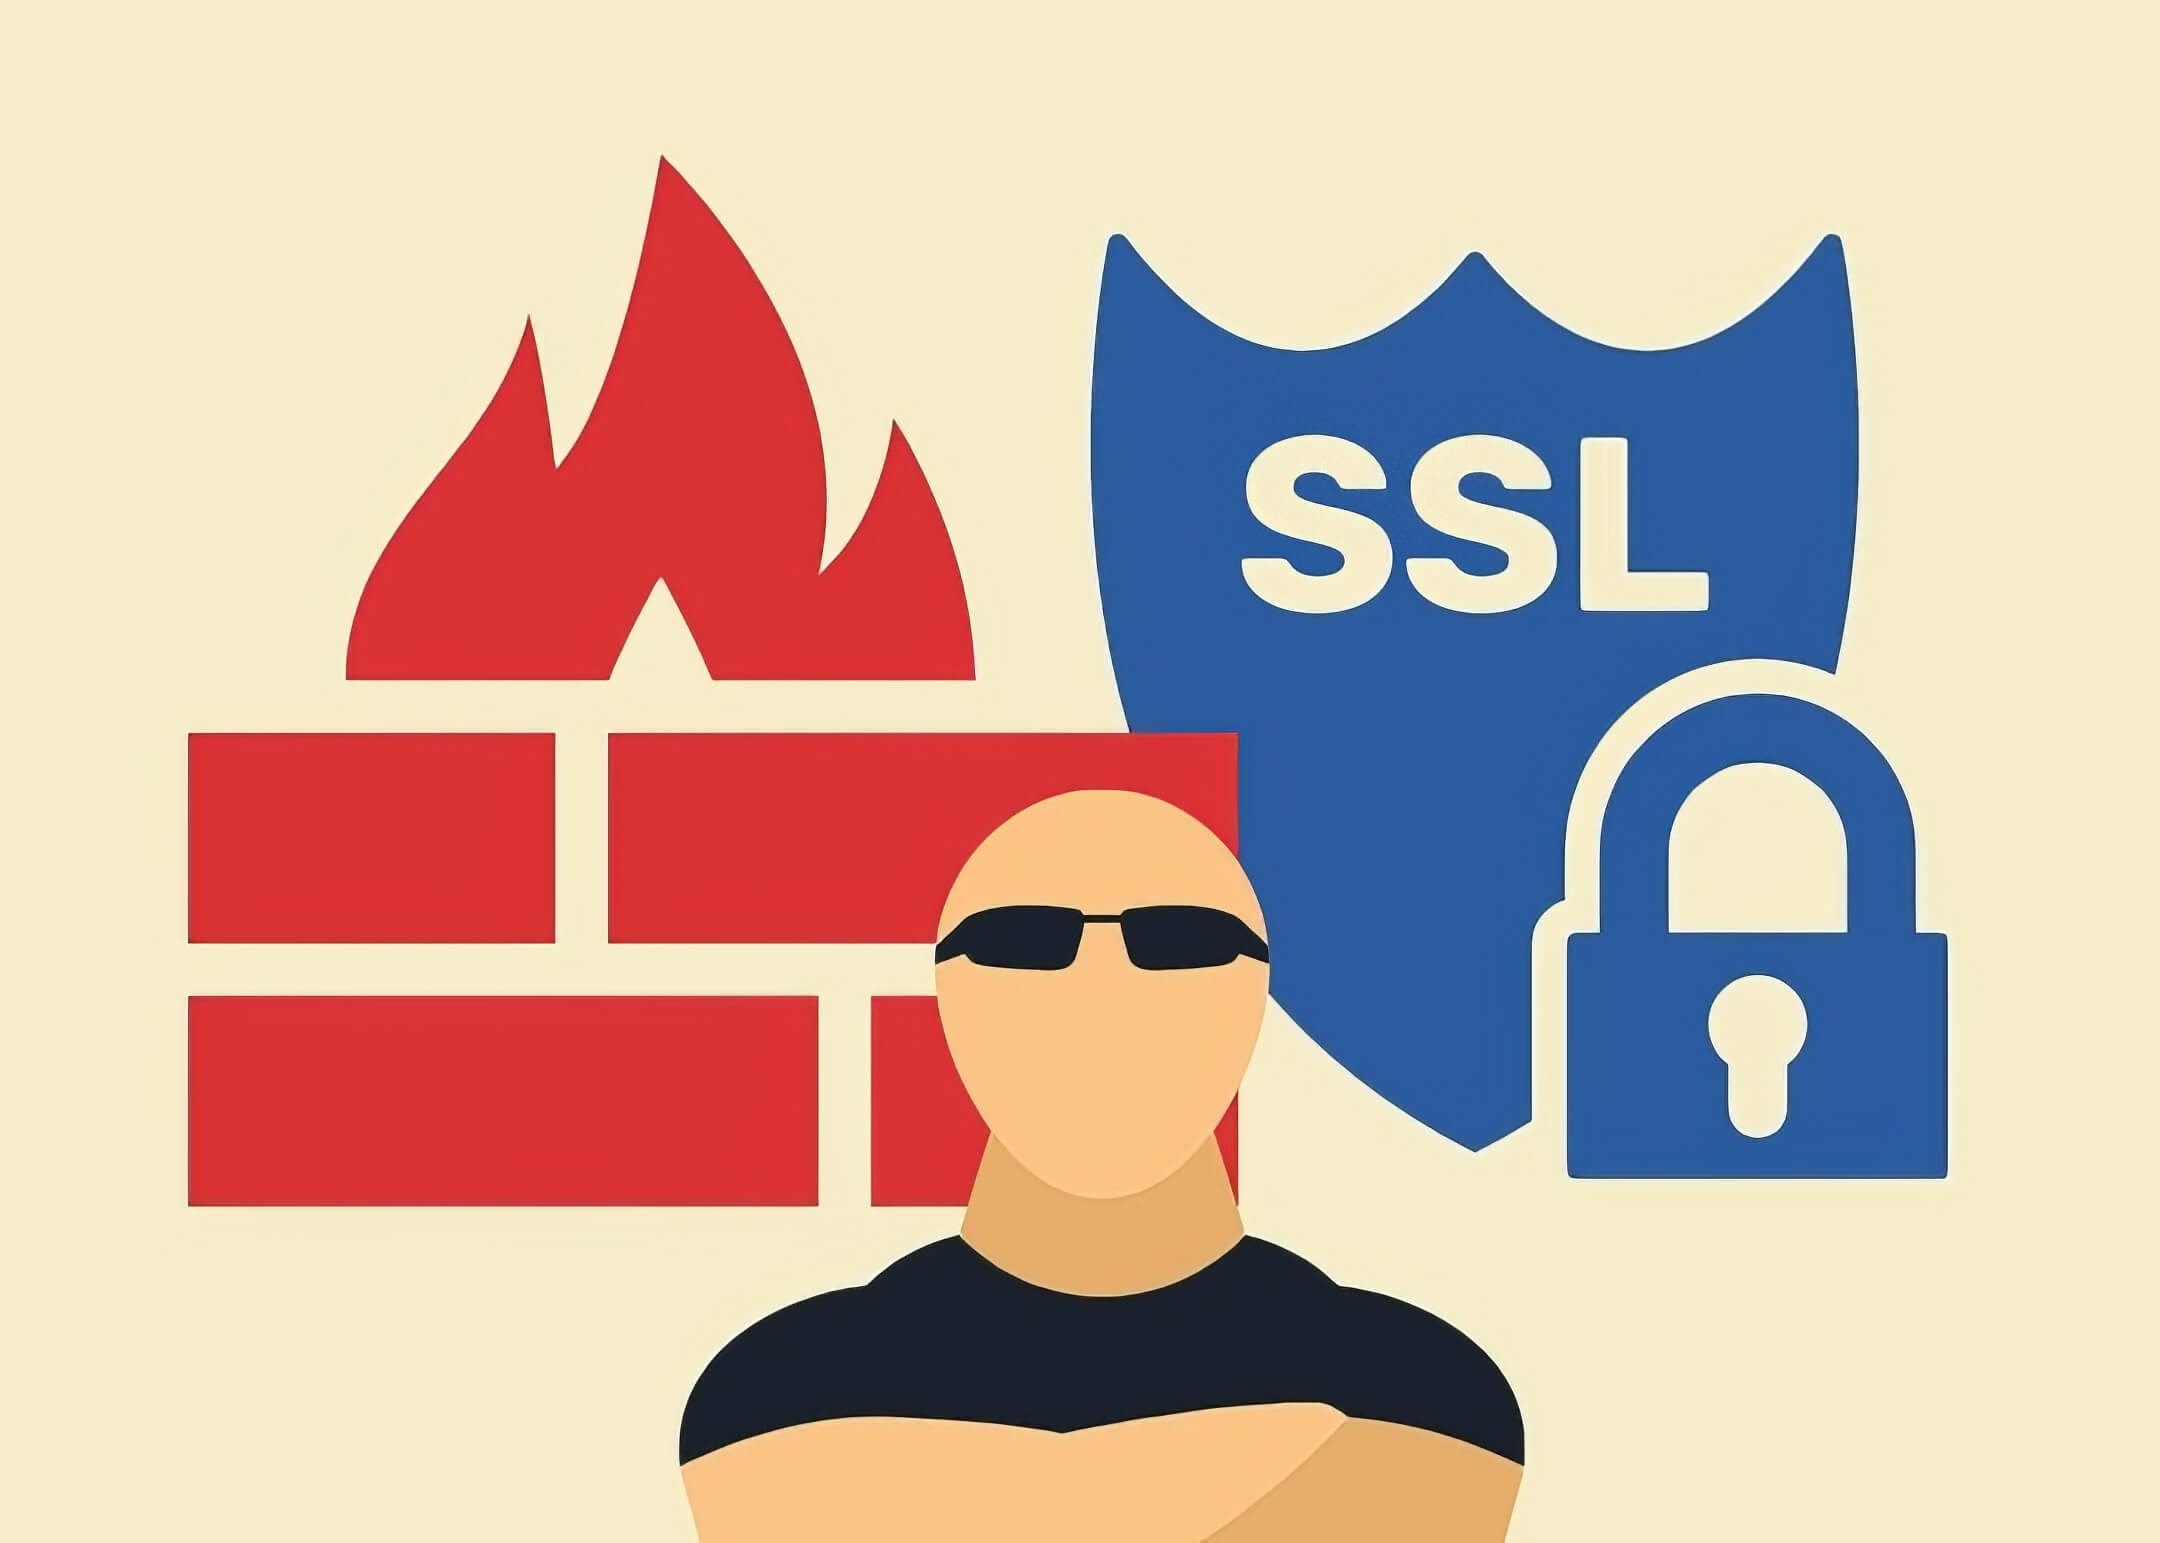 firewall and ssl guarding the website